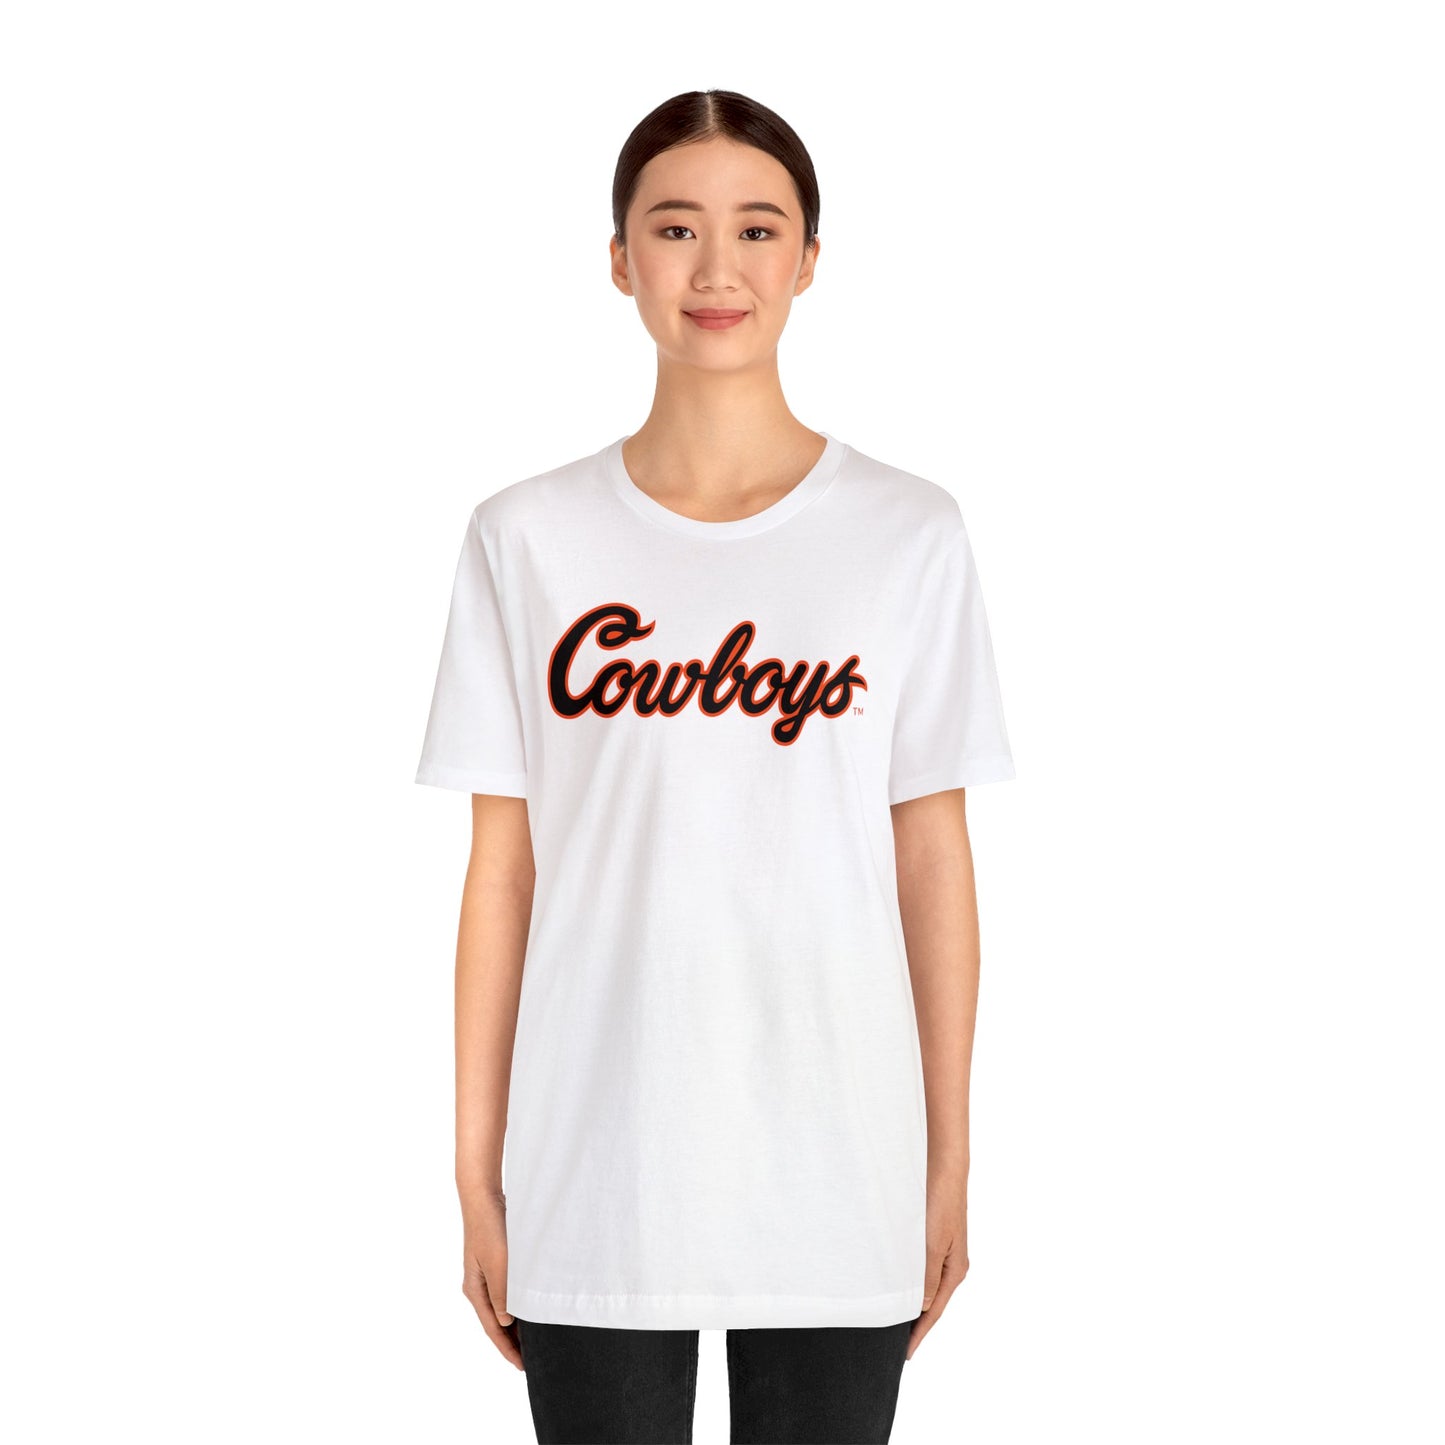 Collin Clay #93 Cursive Cowboys T-Shirt